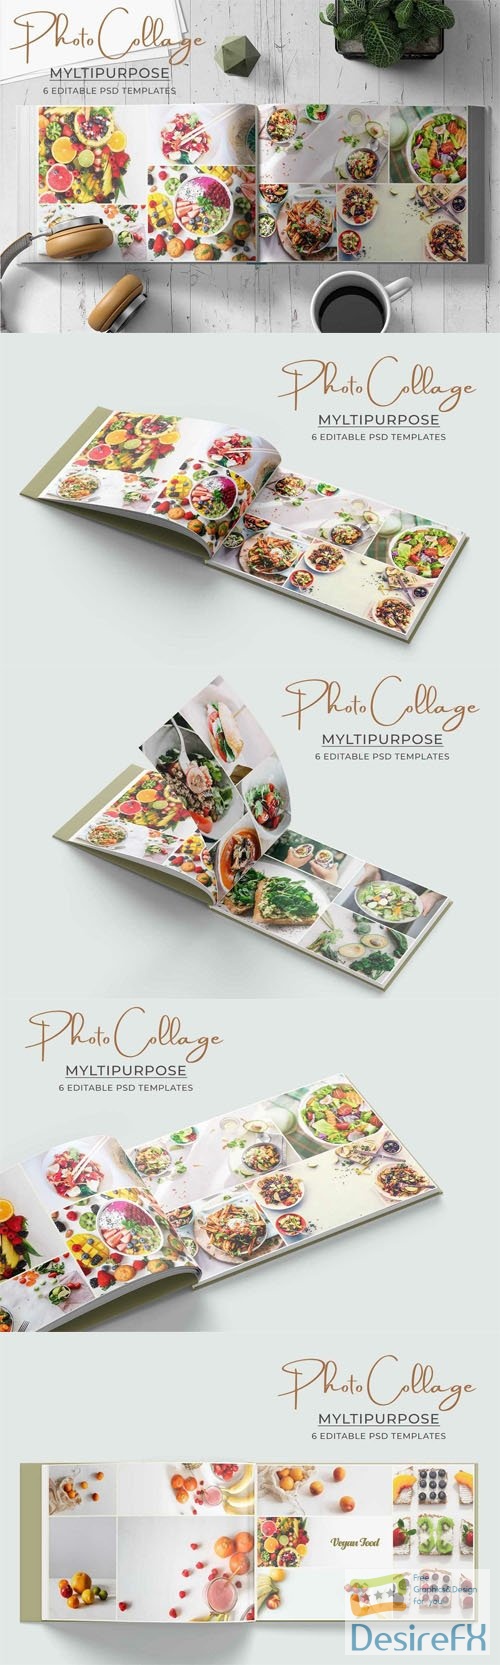 Multipurpose Photo Collage - 6 Editable PSD Templates